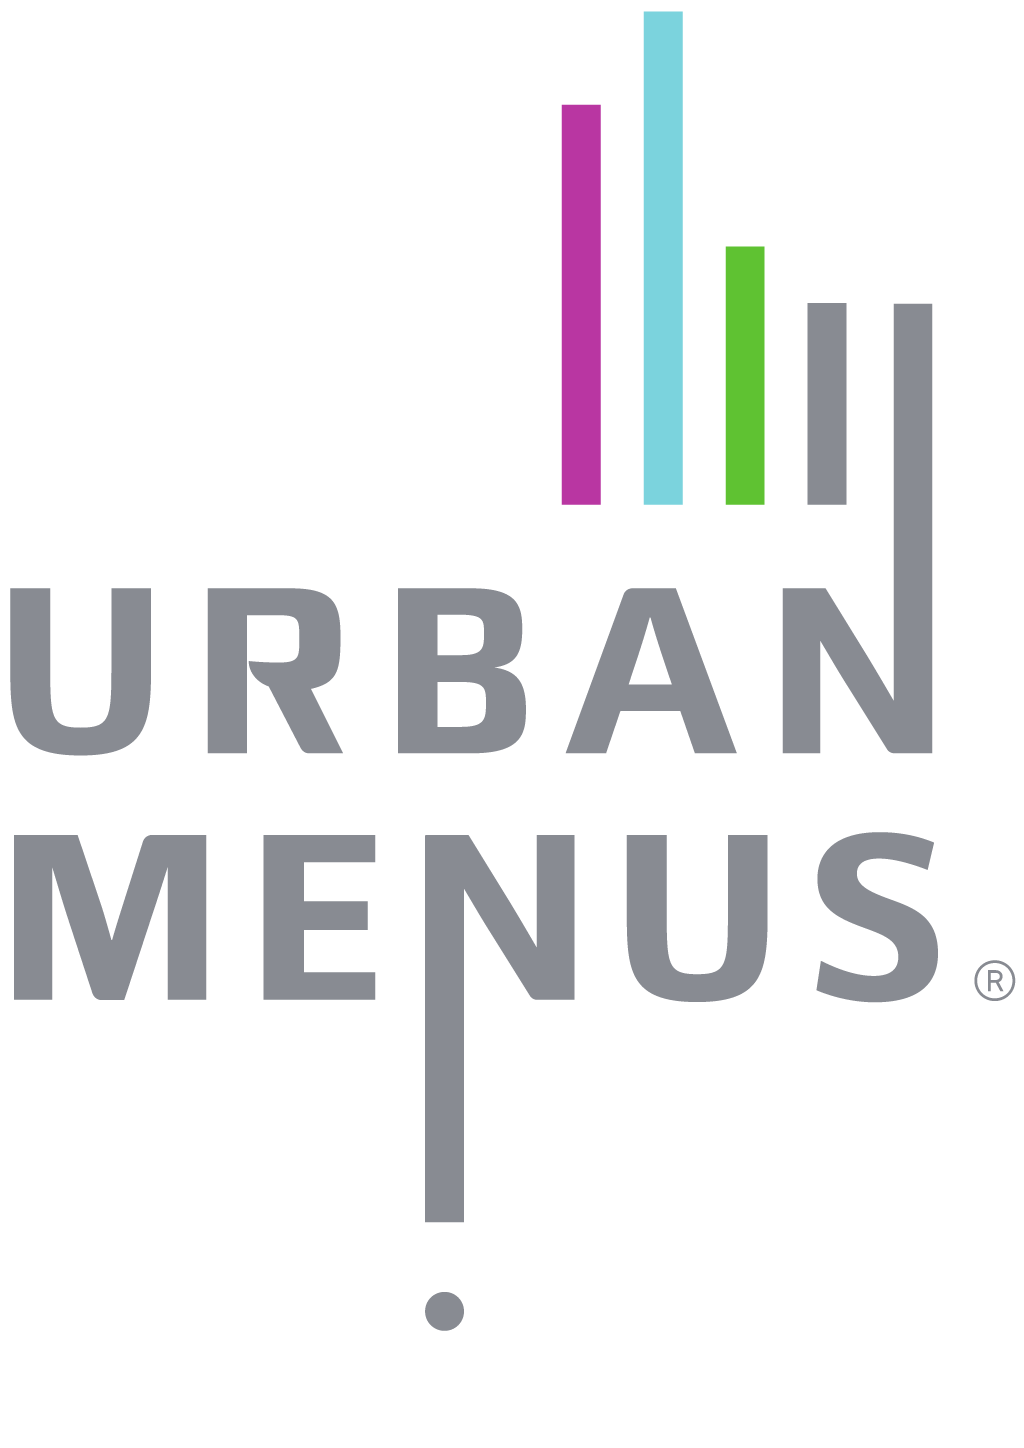 URBAN MENUS 3D-tool and training program for urban planning 